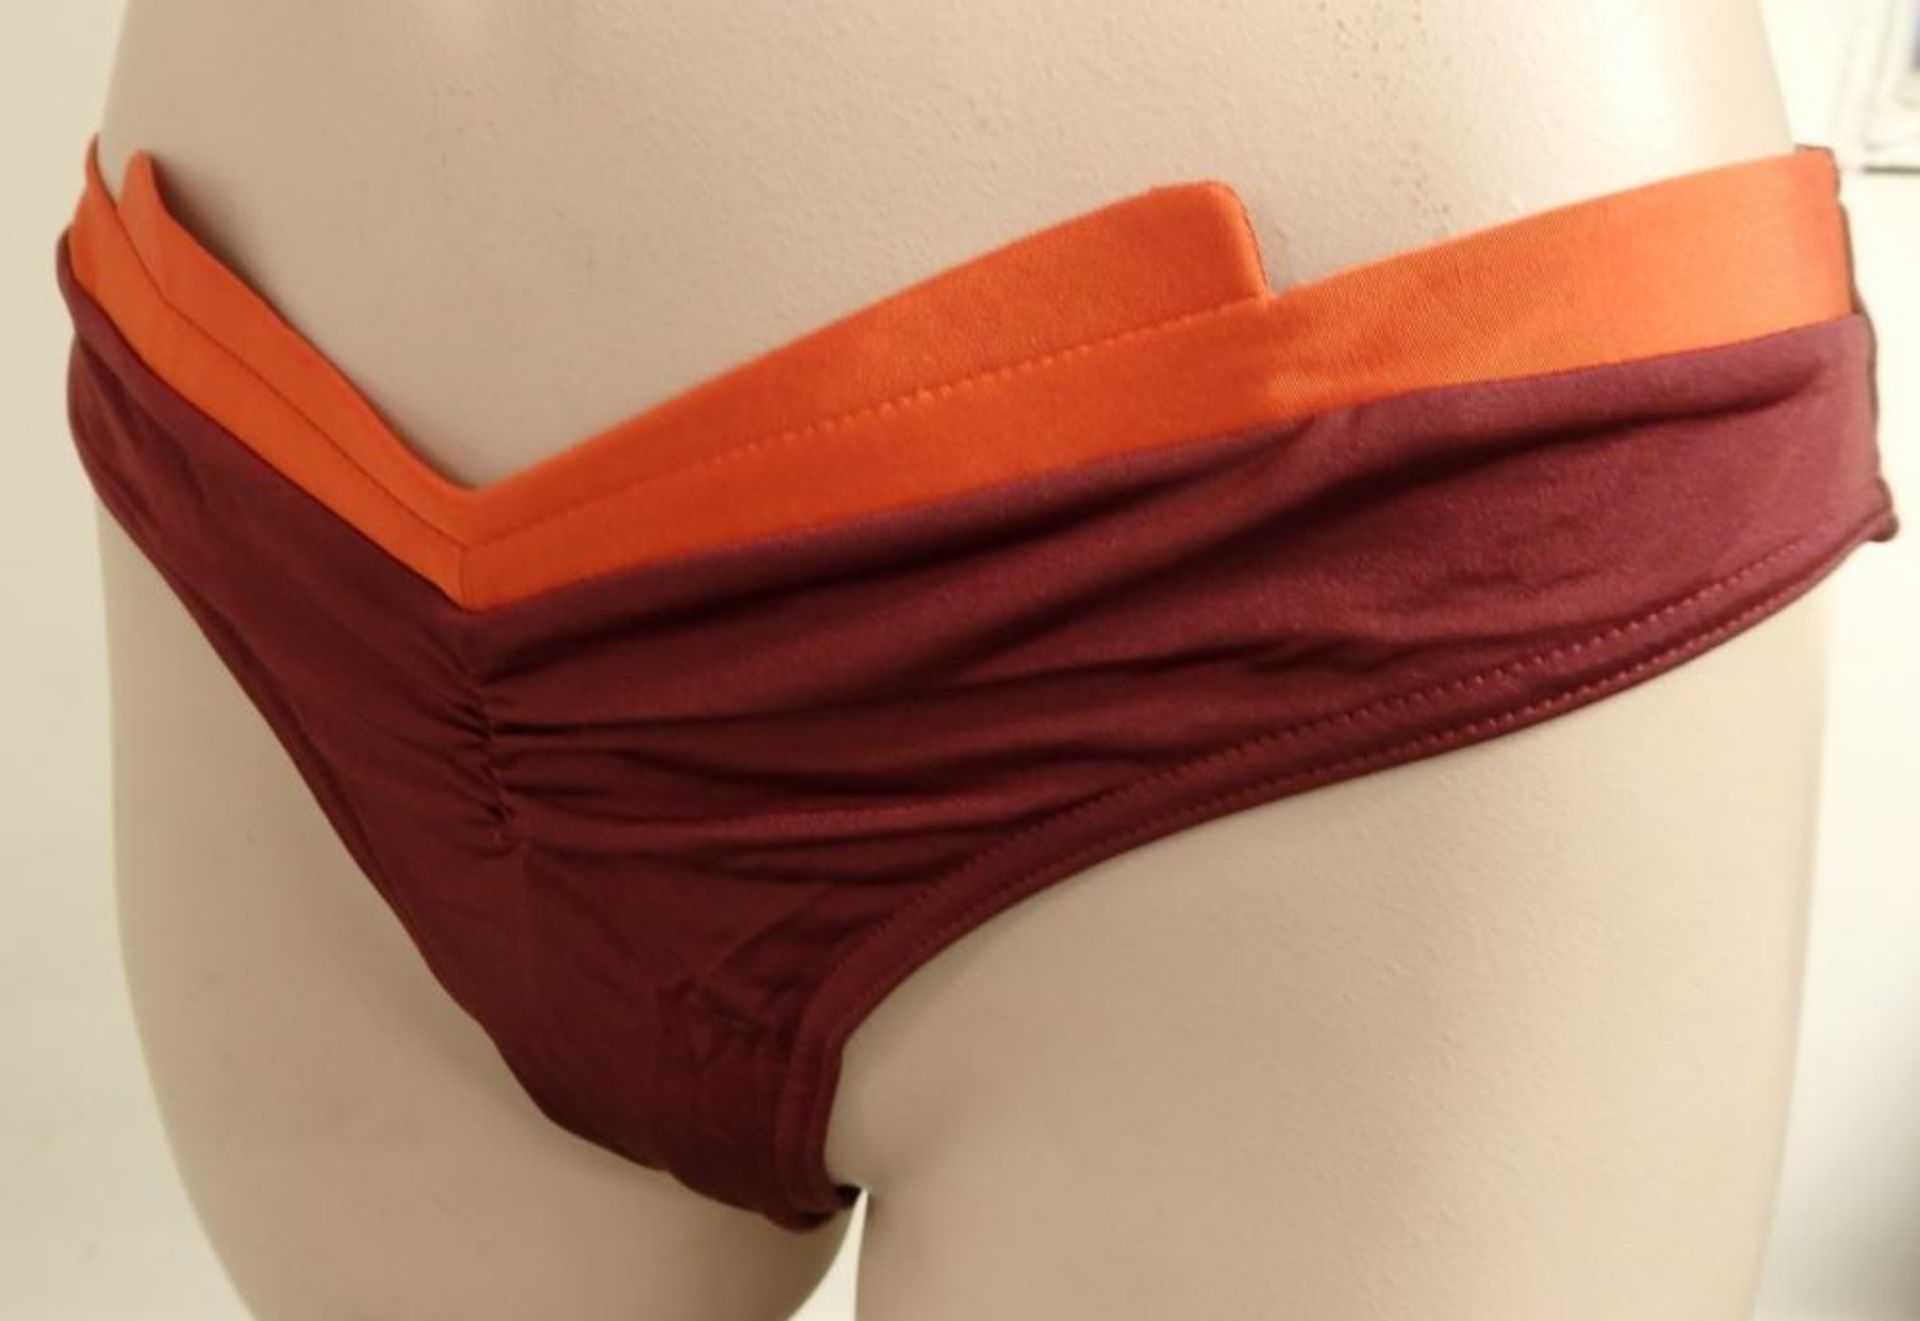 1 x Rasurel - Damson and Orange trim Bikini - R20346 Brassiere - Mini Slip - Size 2C - UK 32 - Fr 85 - Image 6 of 6